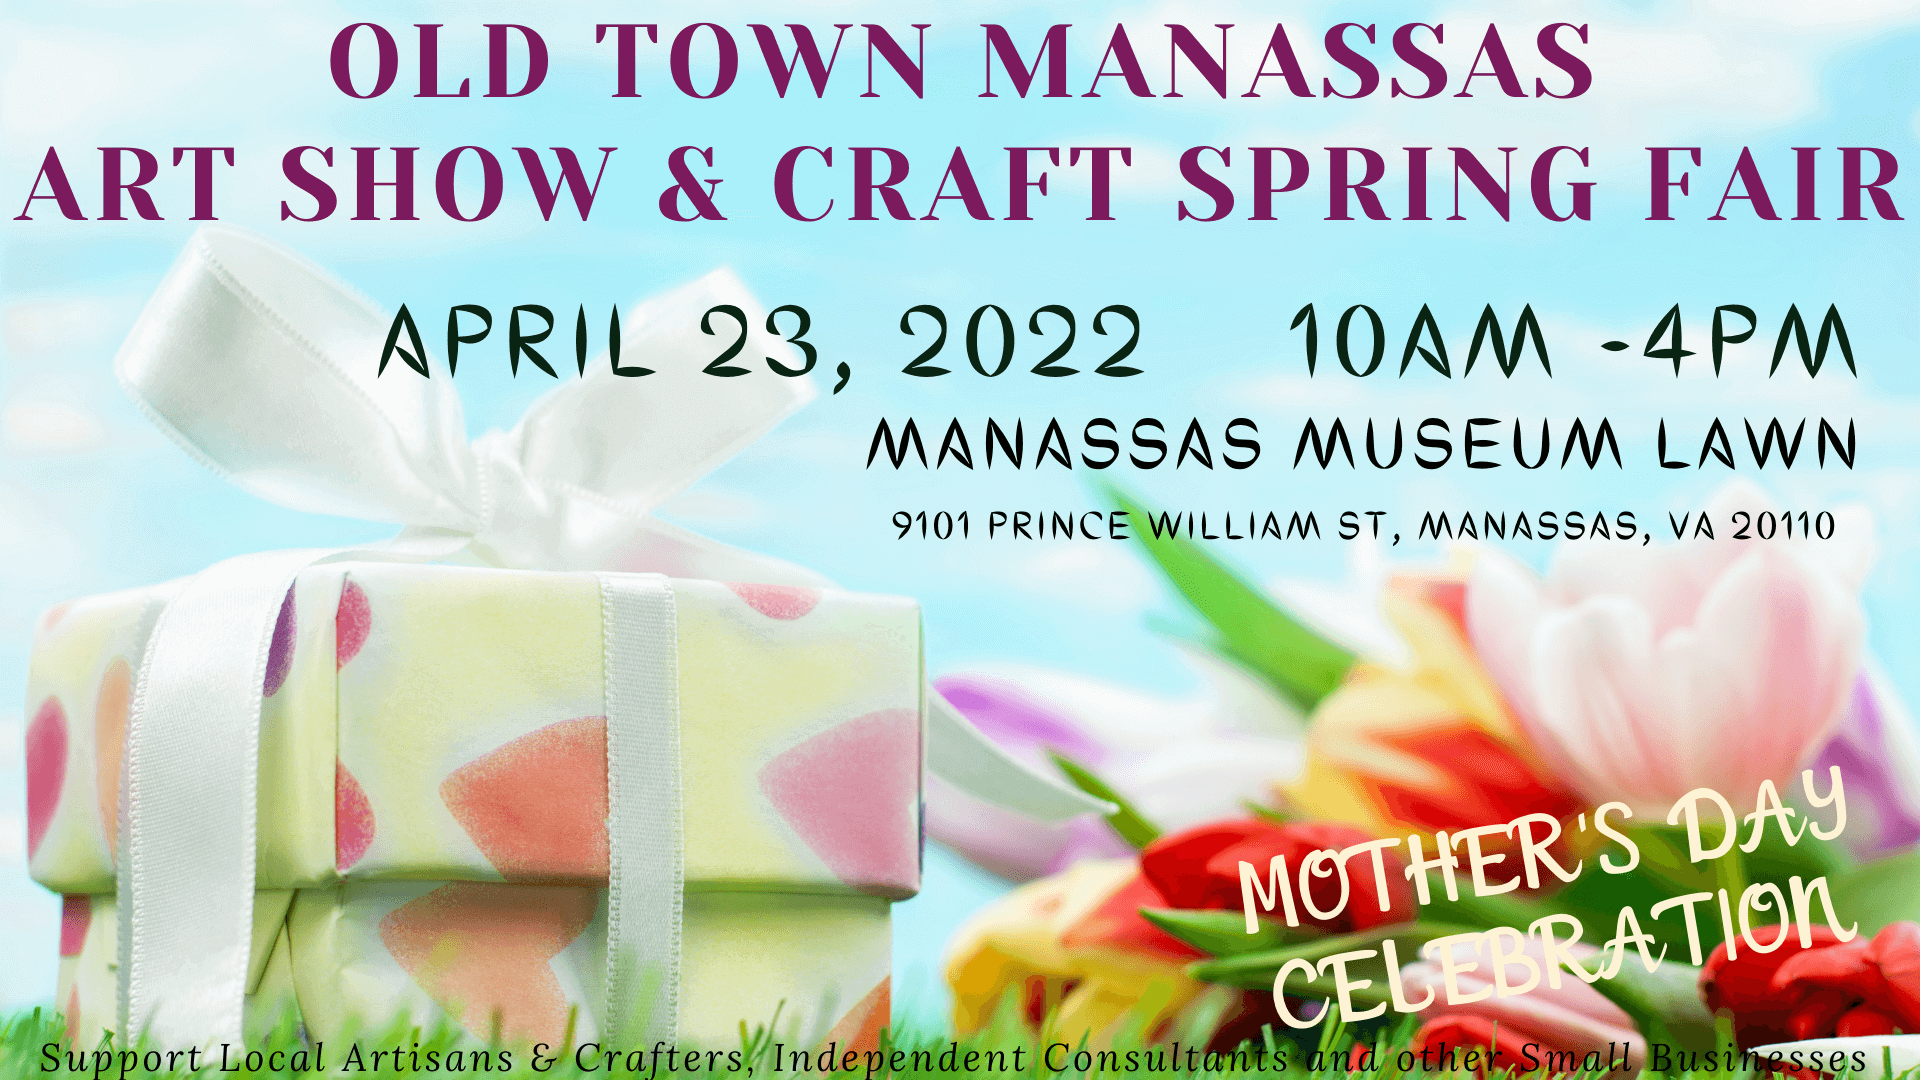 Old Town Manassas Art Show & Craft Spring Fair ~ Mother's Day Celebration